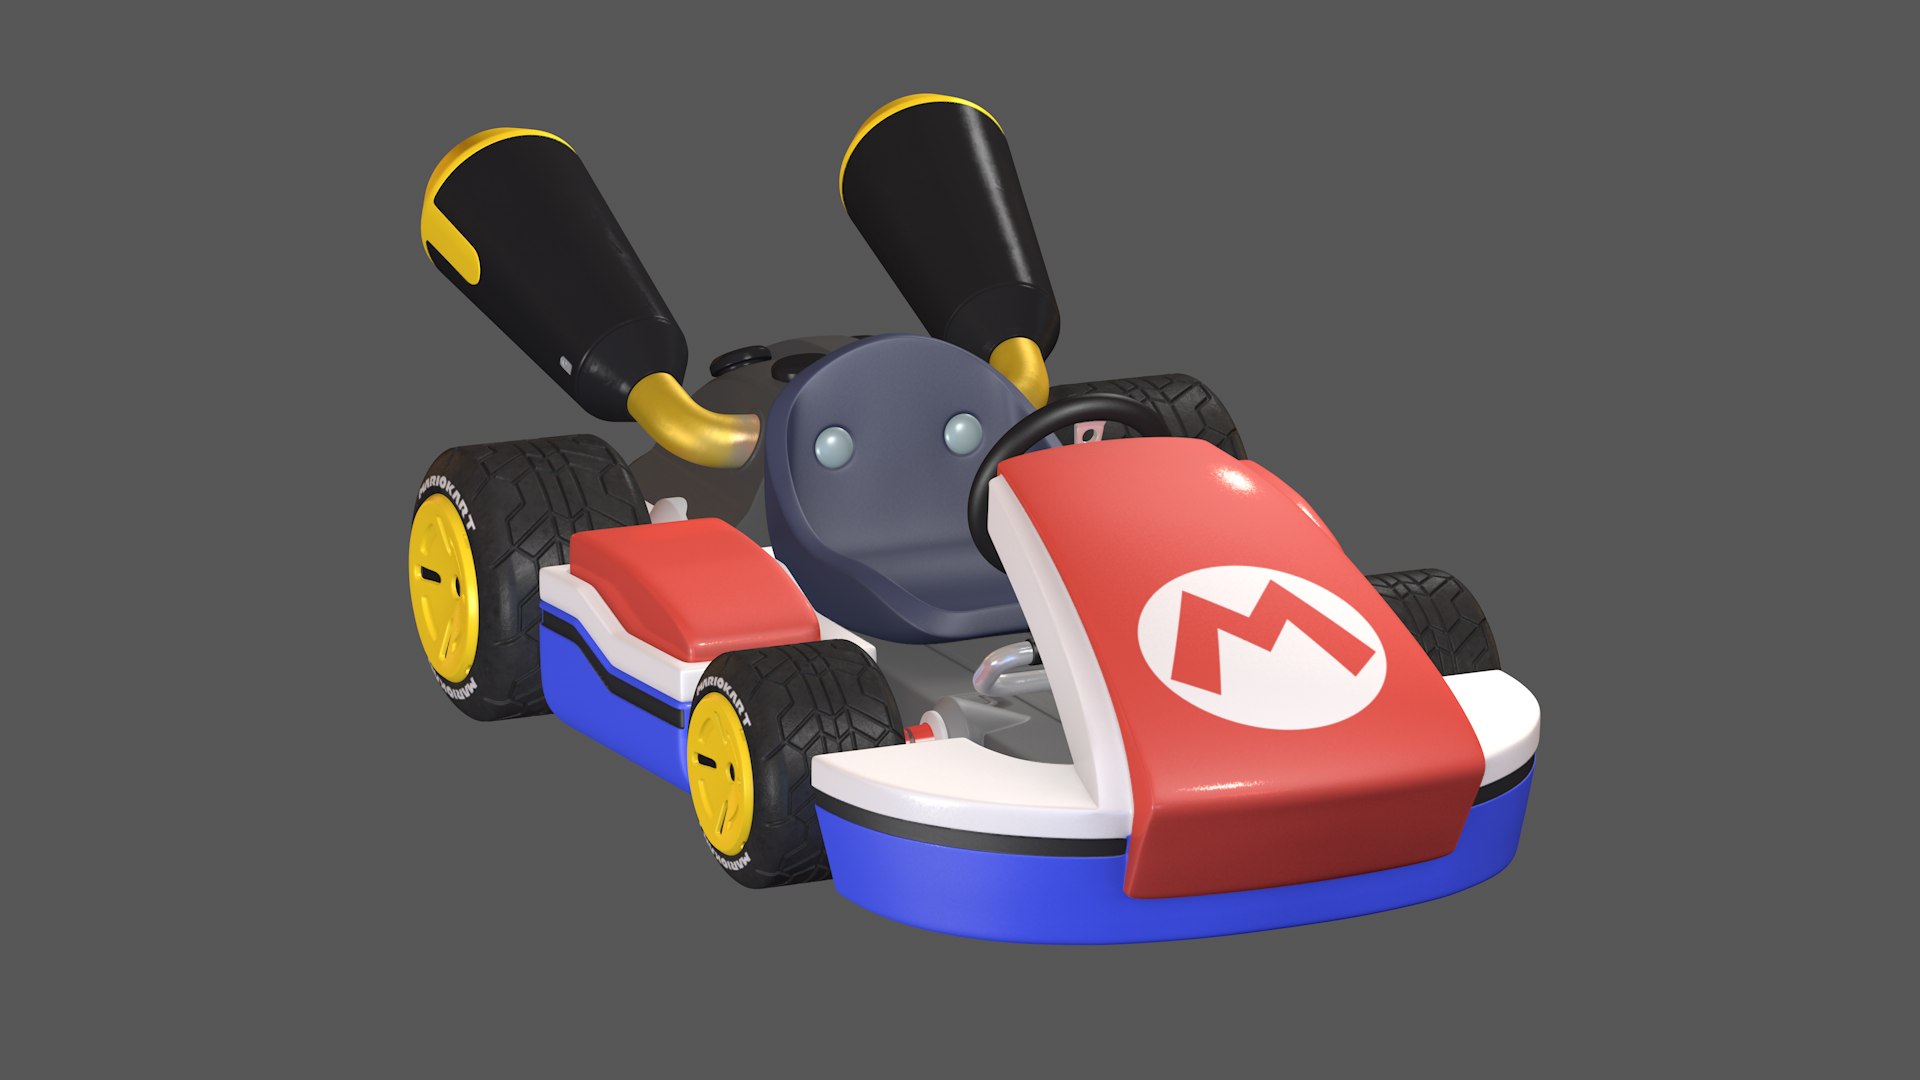 Kart - super mario 3D model - TurboSquid 1627633